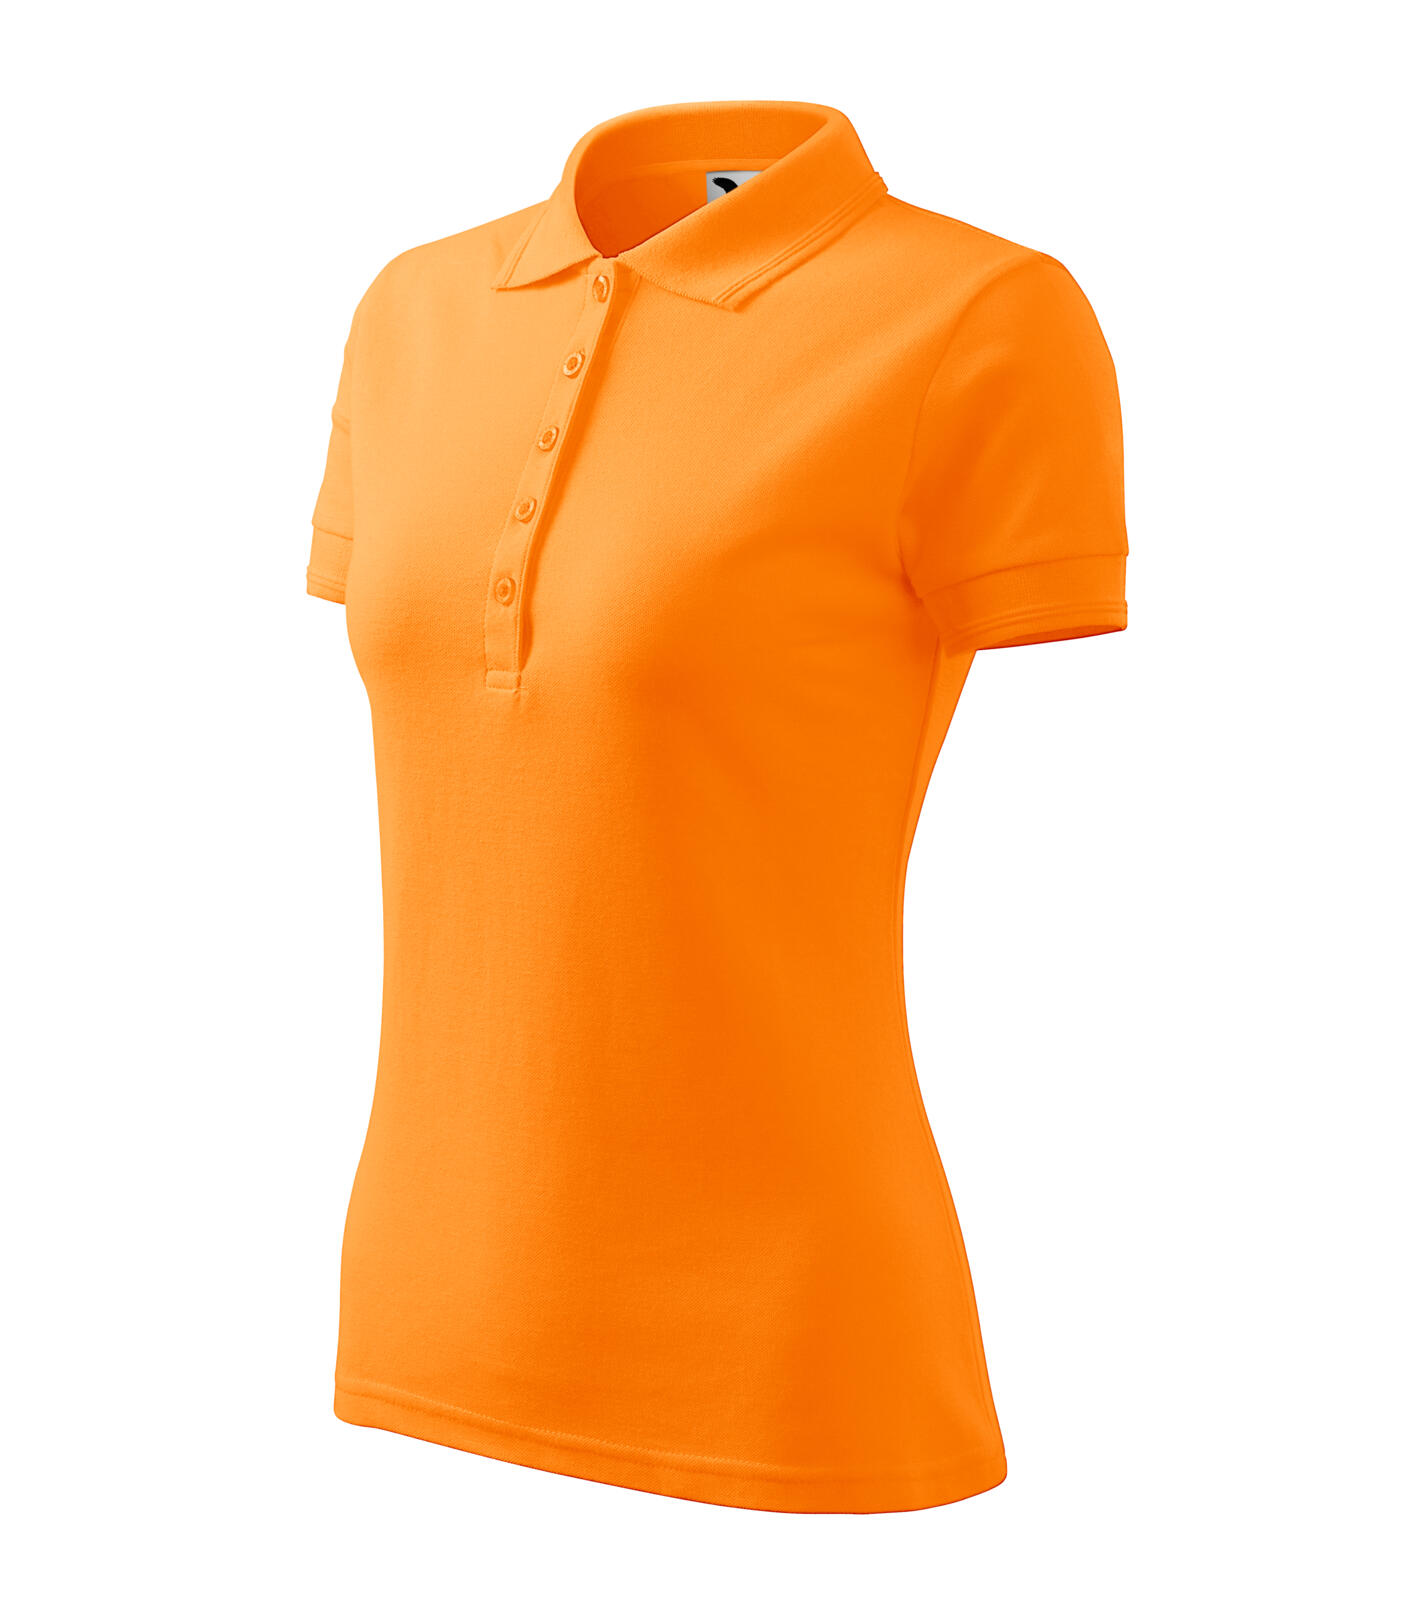 Pique Polo Polokošile dámská Barva: tangerine orange, Velikost: L